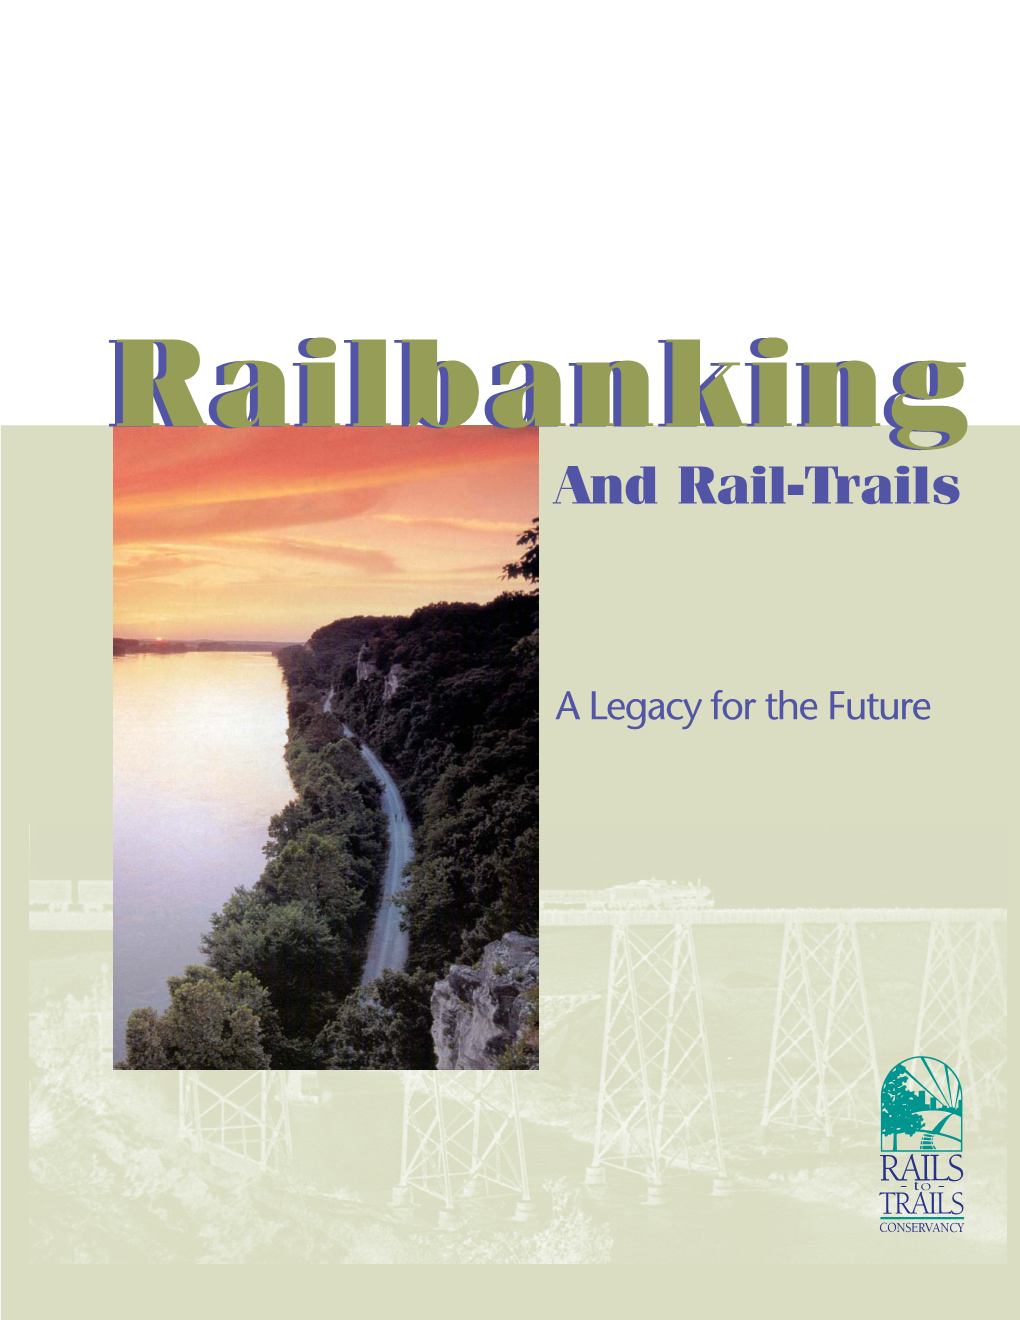 Railbanking and Rail-Trails